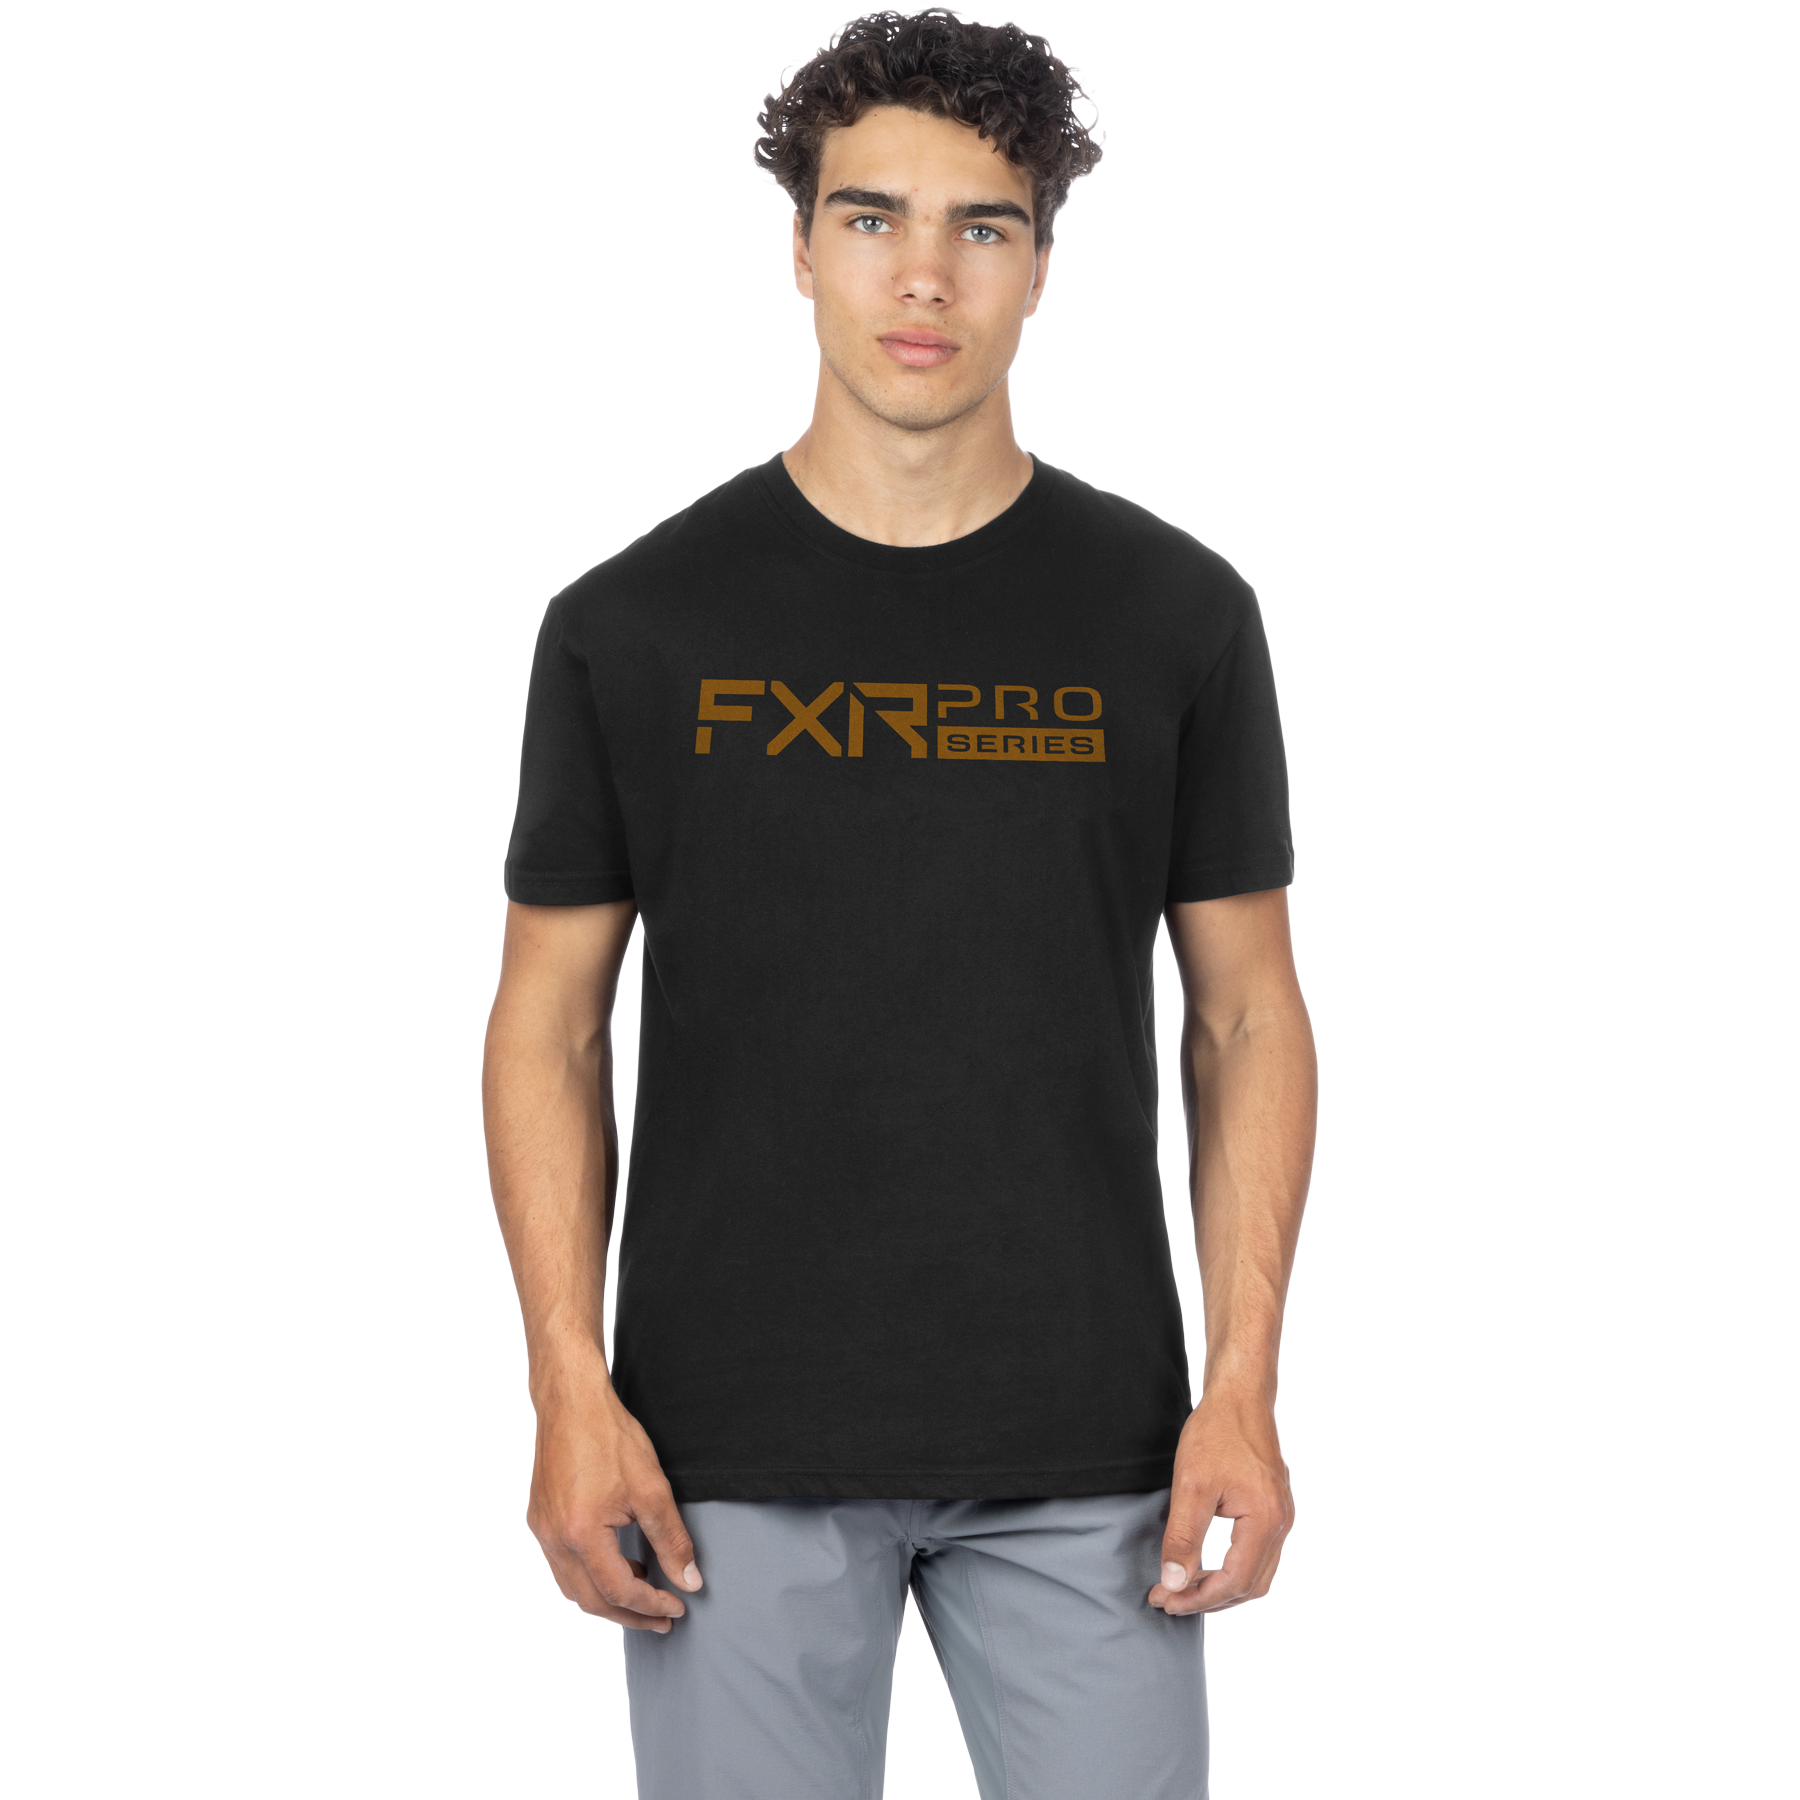 fxr racing t-shirt shirts for men pro series premium